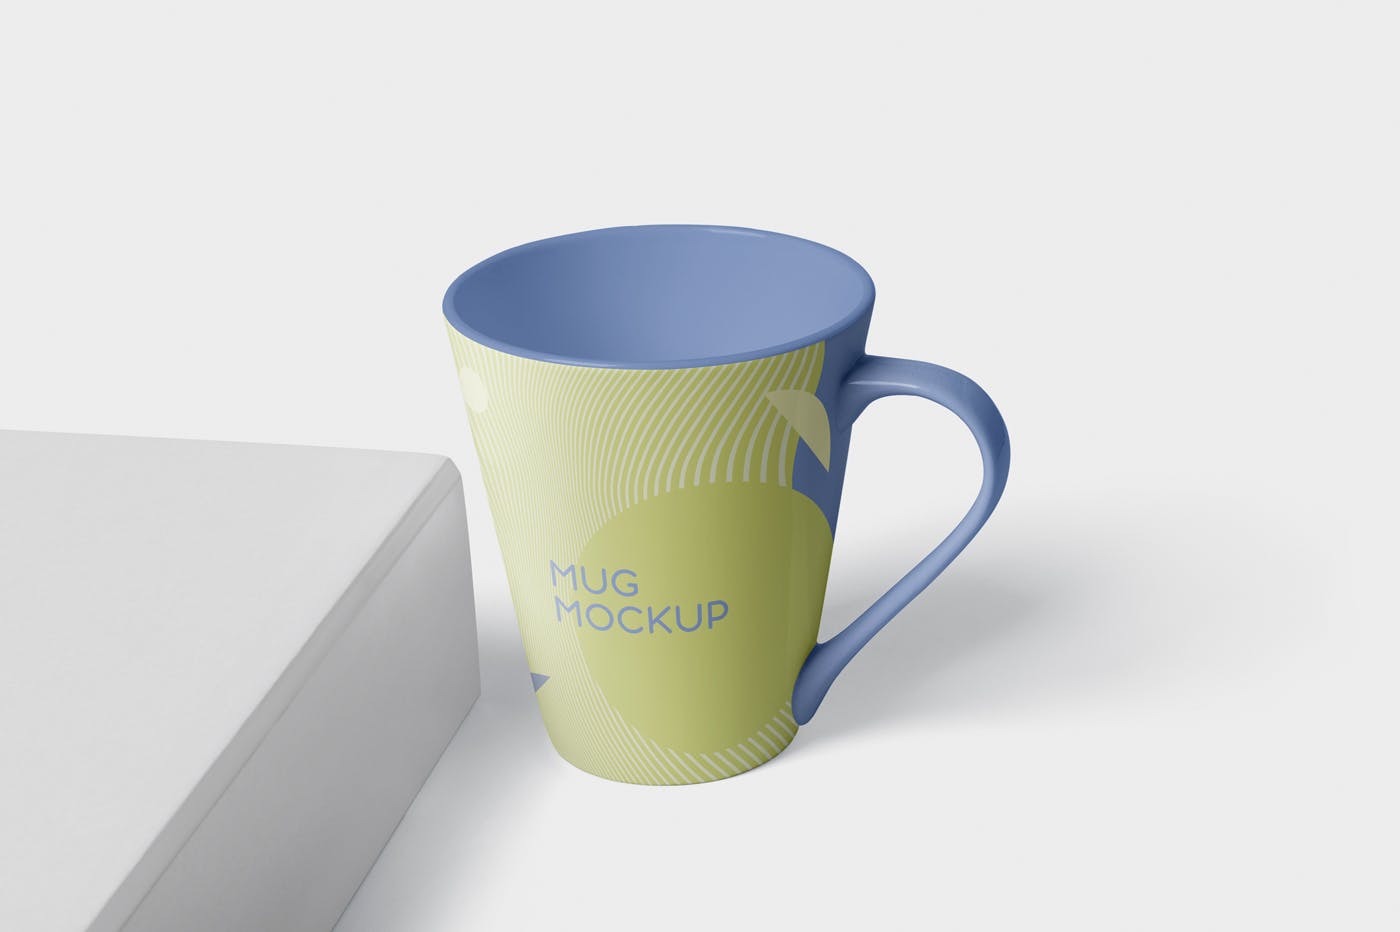 锥形马克杯图案设计第一素材精选 Mug Mockup – Cone Shaped插图(3)